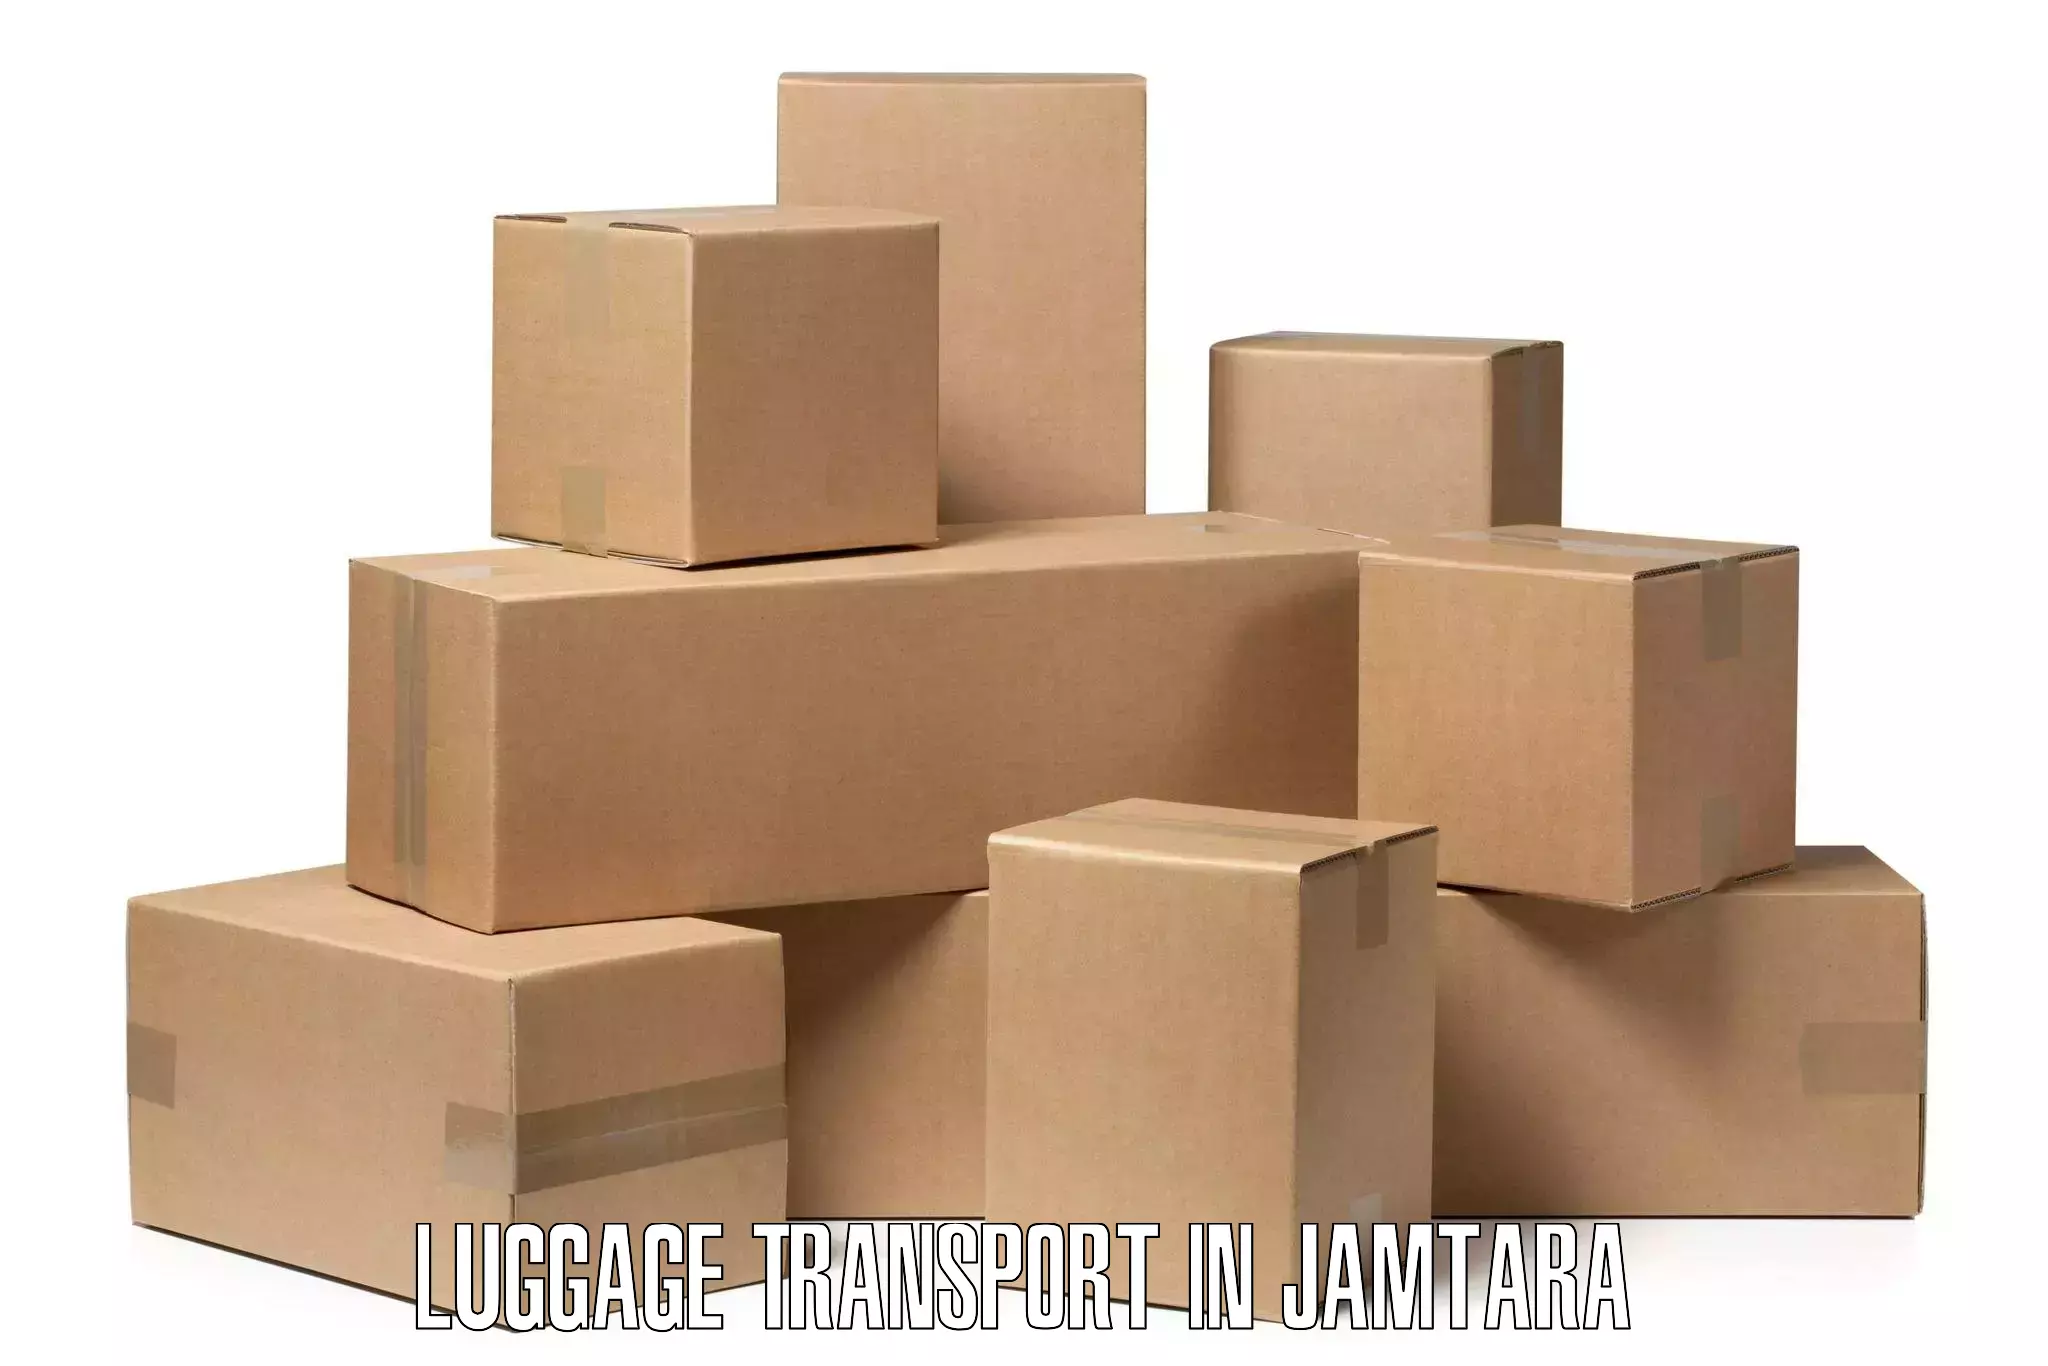 Simplified luggage transport in Jamtara